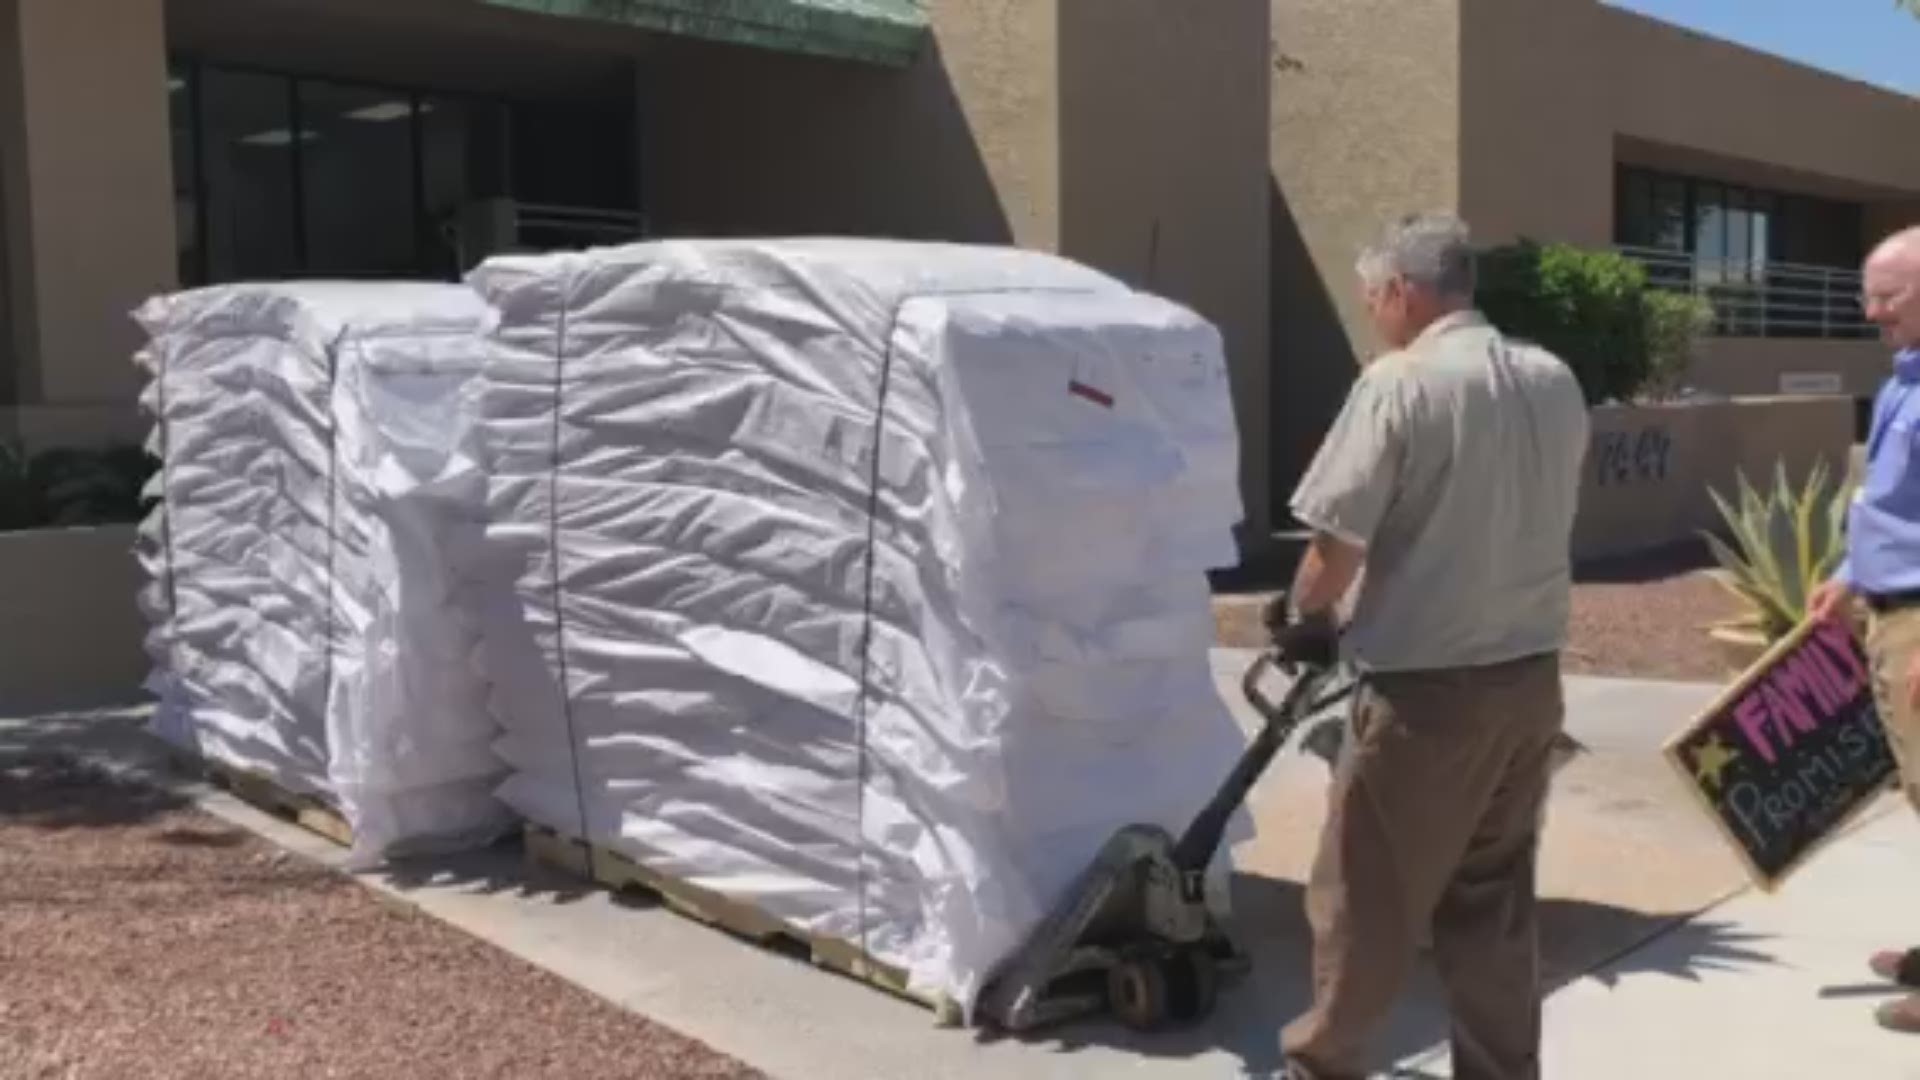 Dozens of mattresses delivered to shelter Friday